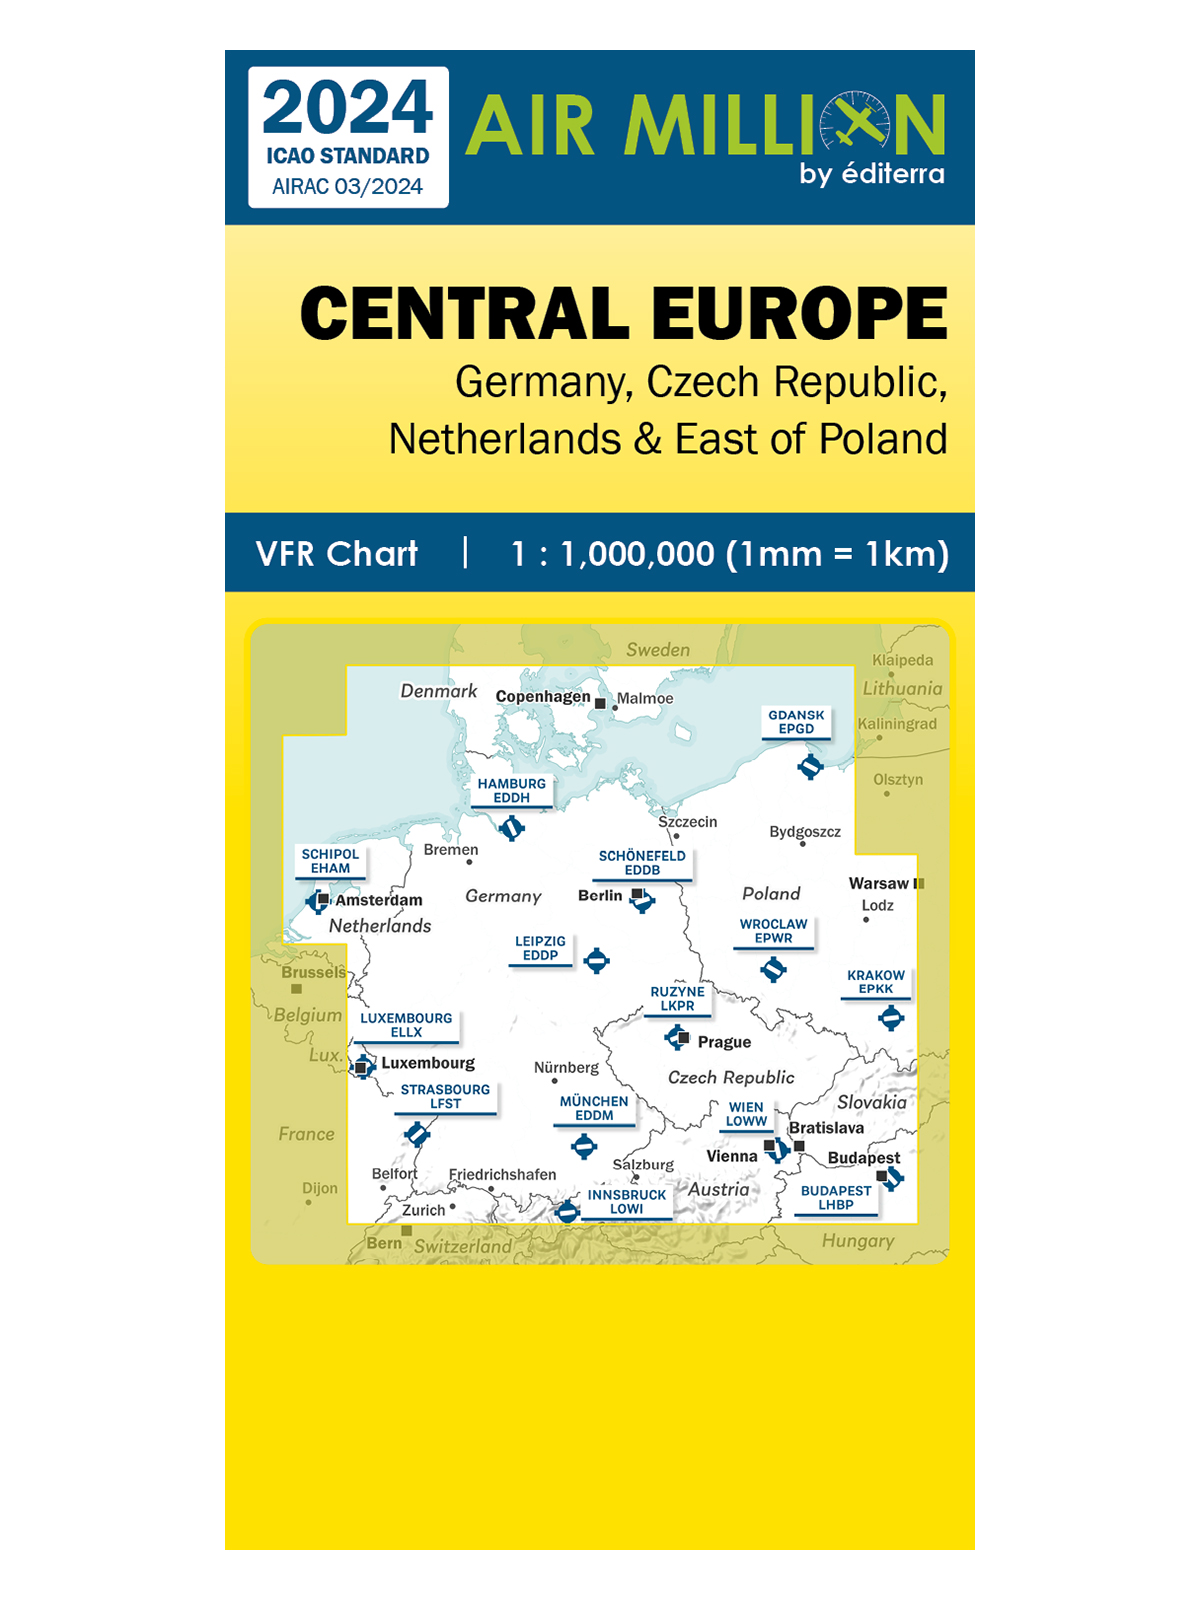 Central Europe - Air Million VFR Chart 1:1.000.000, folded